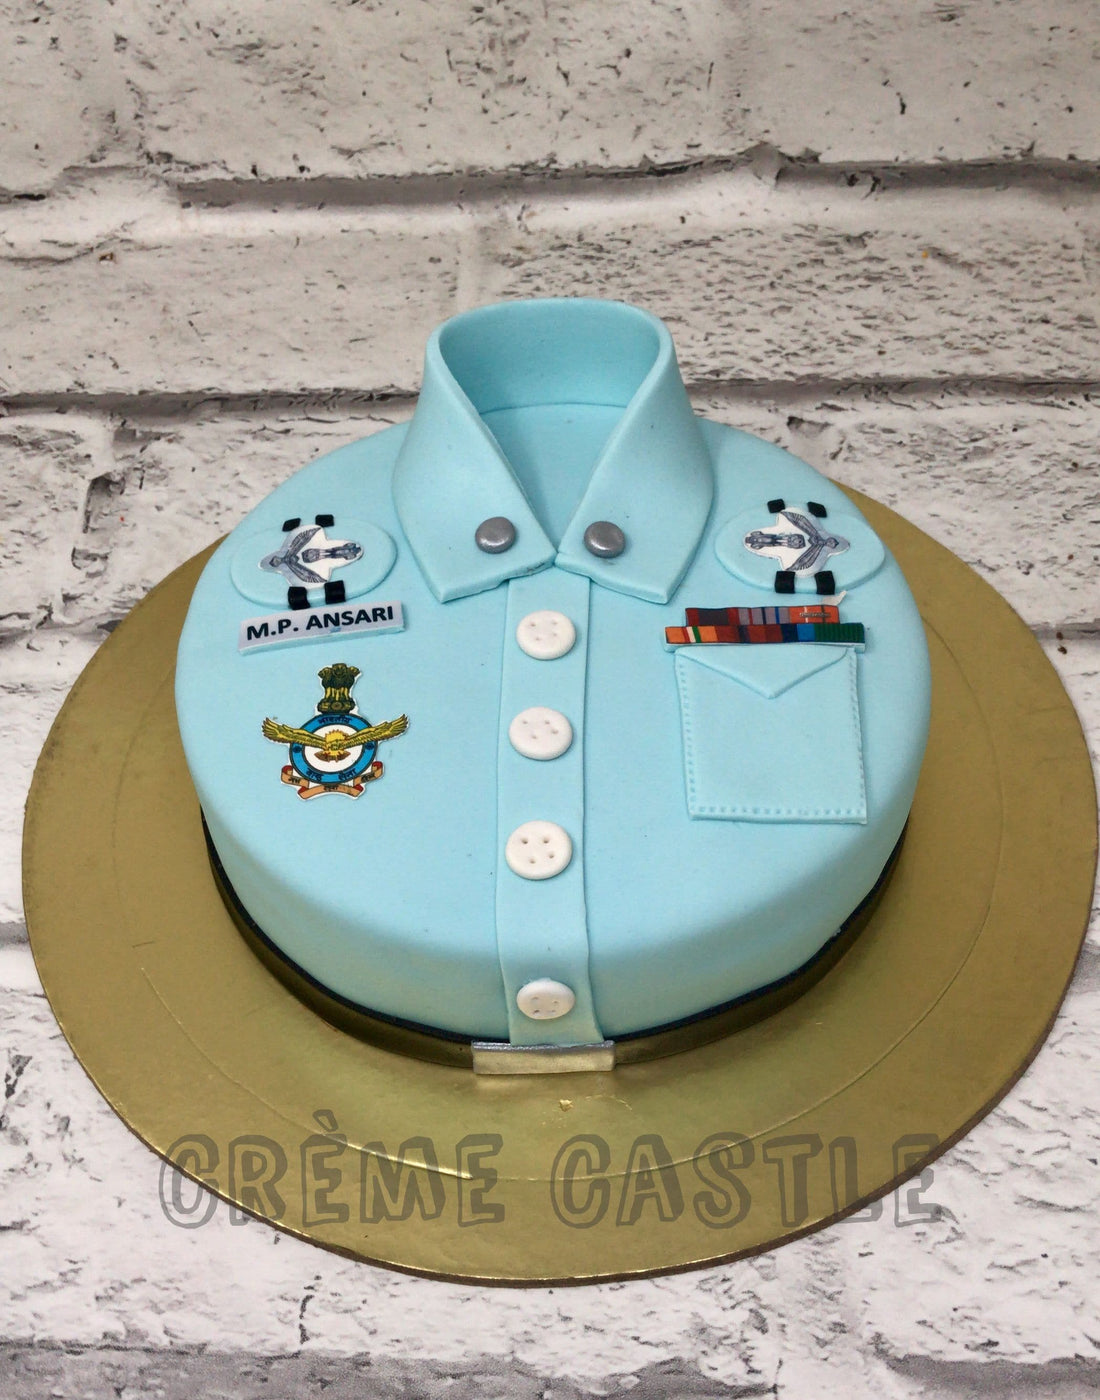 Airforce Uniform Cake